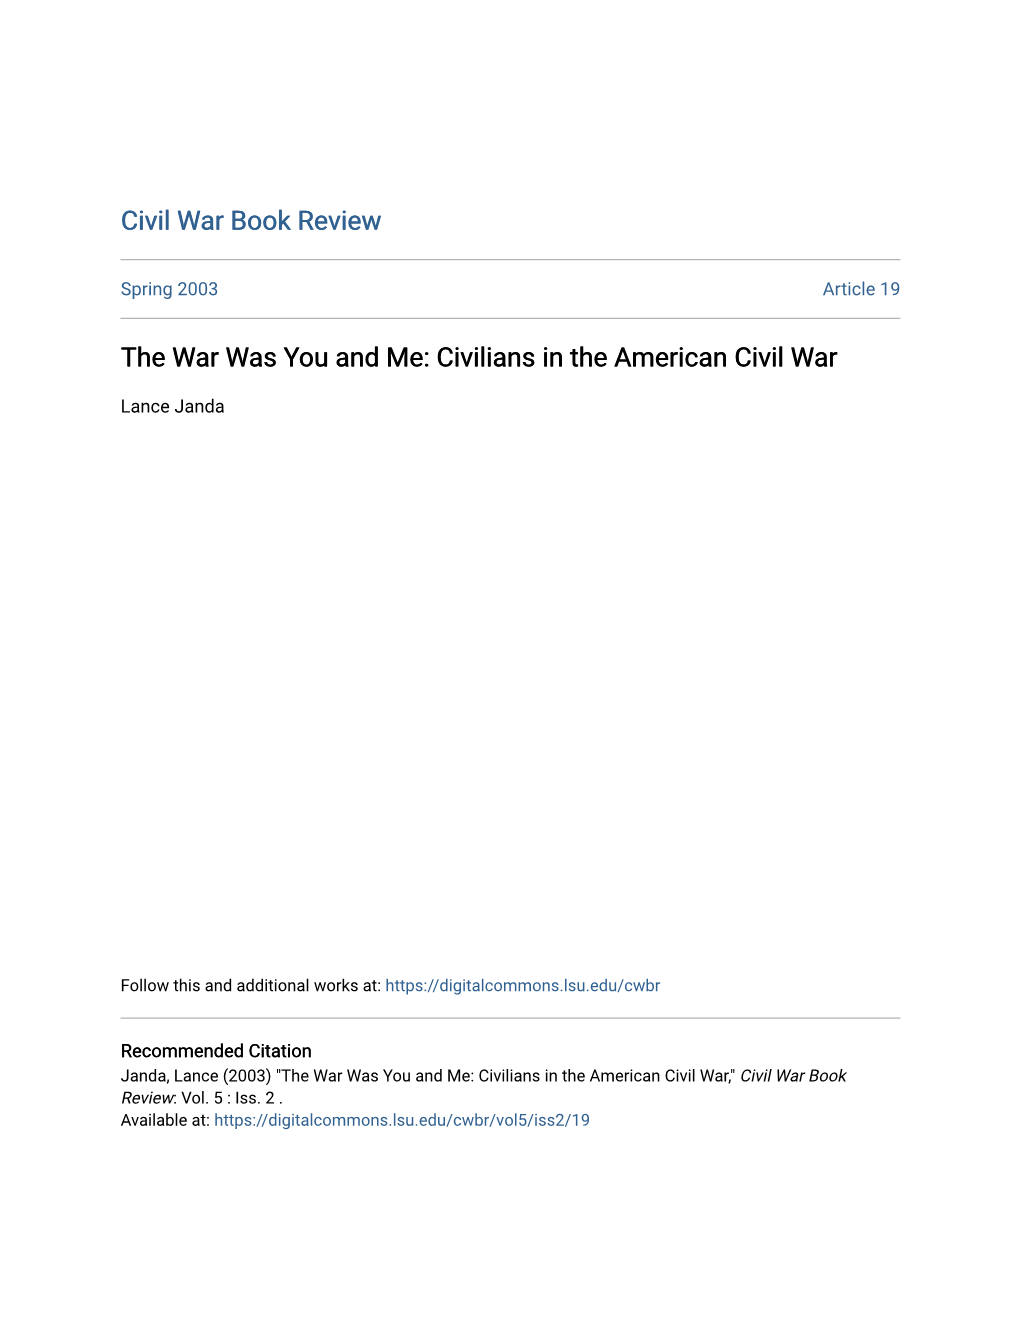 Civilians in the American Civil War